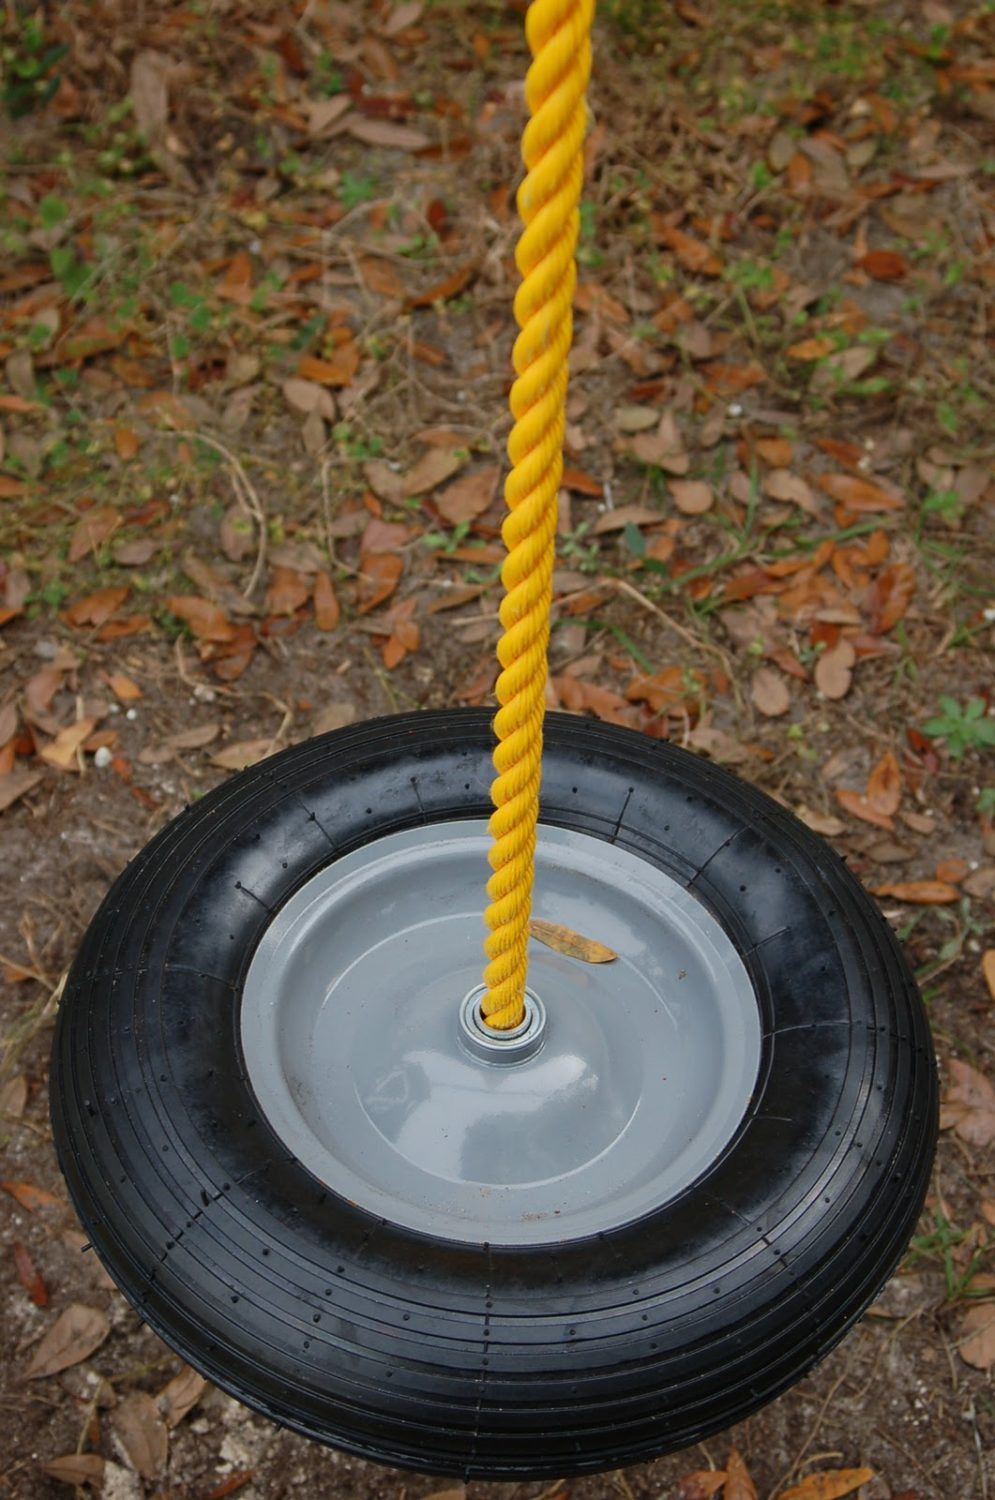 Tire Swing For Kids
 19 Free DIY Tire Swing Instructions